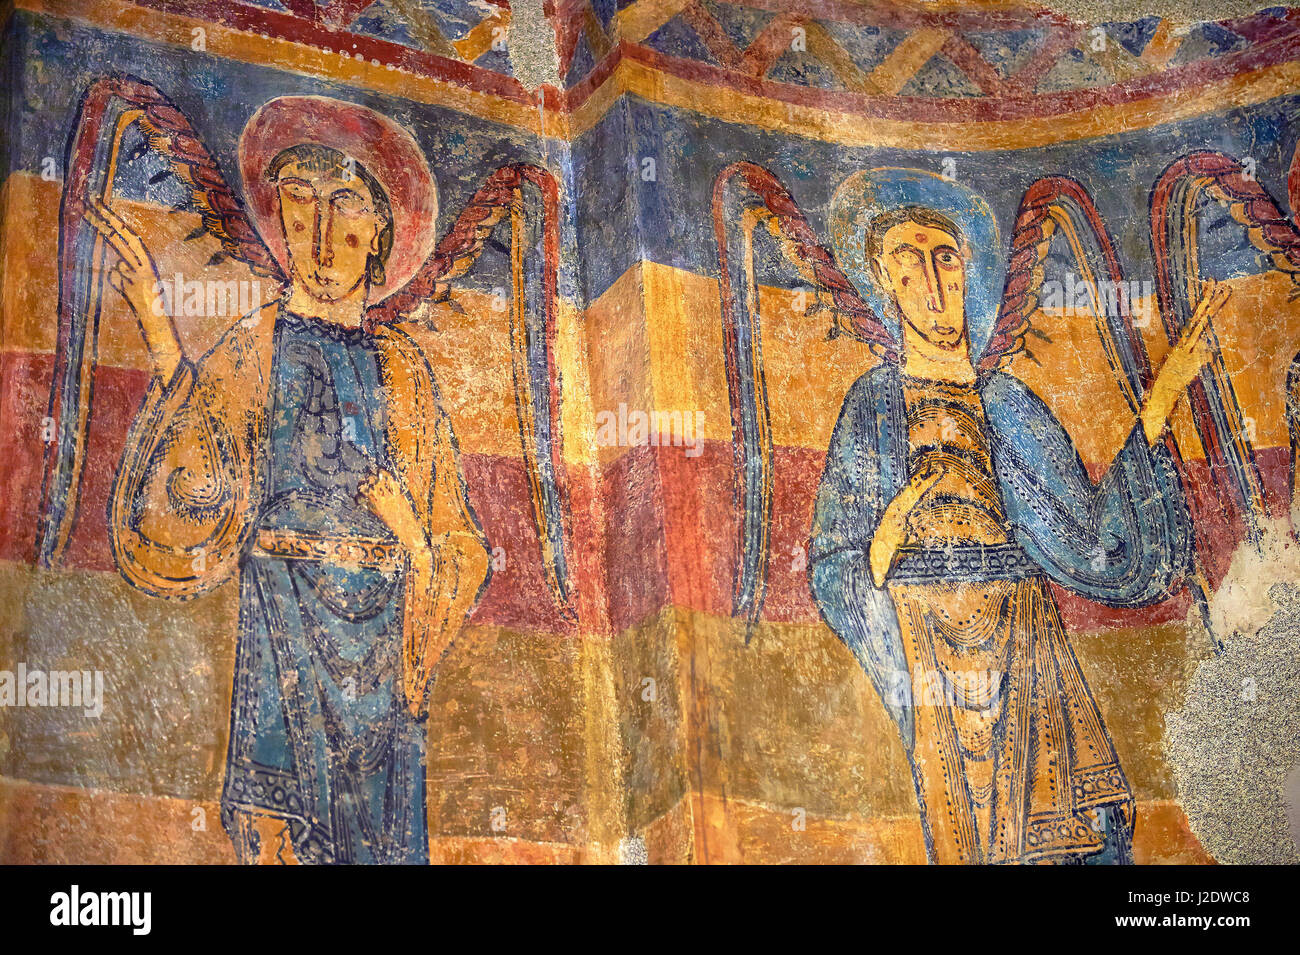 Romanische Fresken aus der Kirche von Sant Clement de Taull, Vall de Boi, Alta Ribagorca, Spanien. Gemalt um 1123.  National Art Museum of Catalon Stockfoto